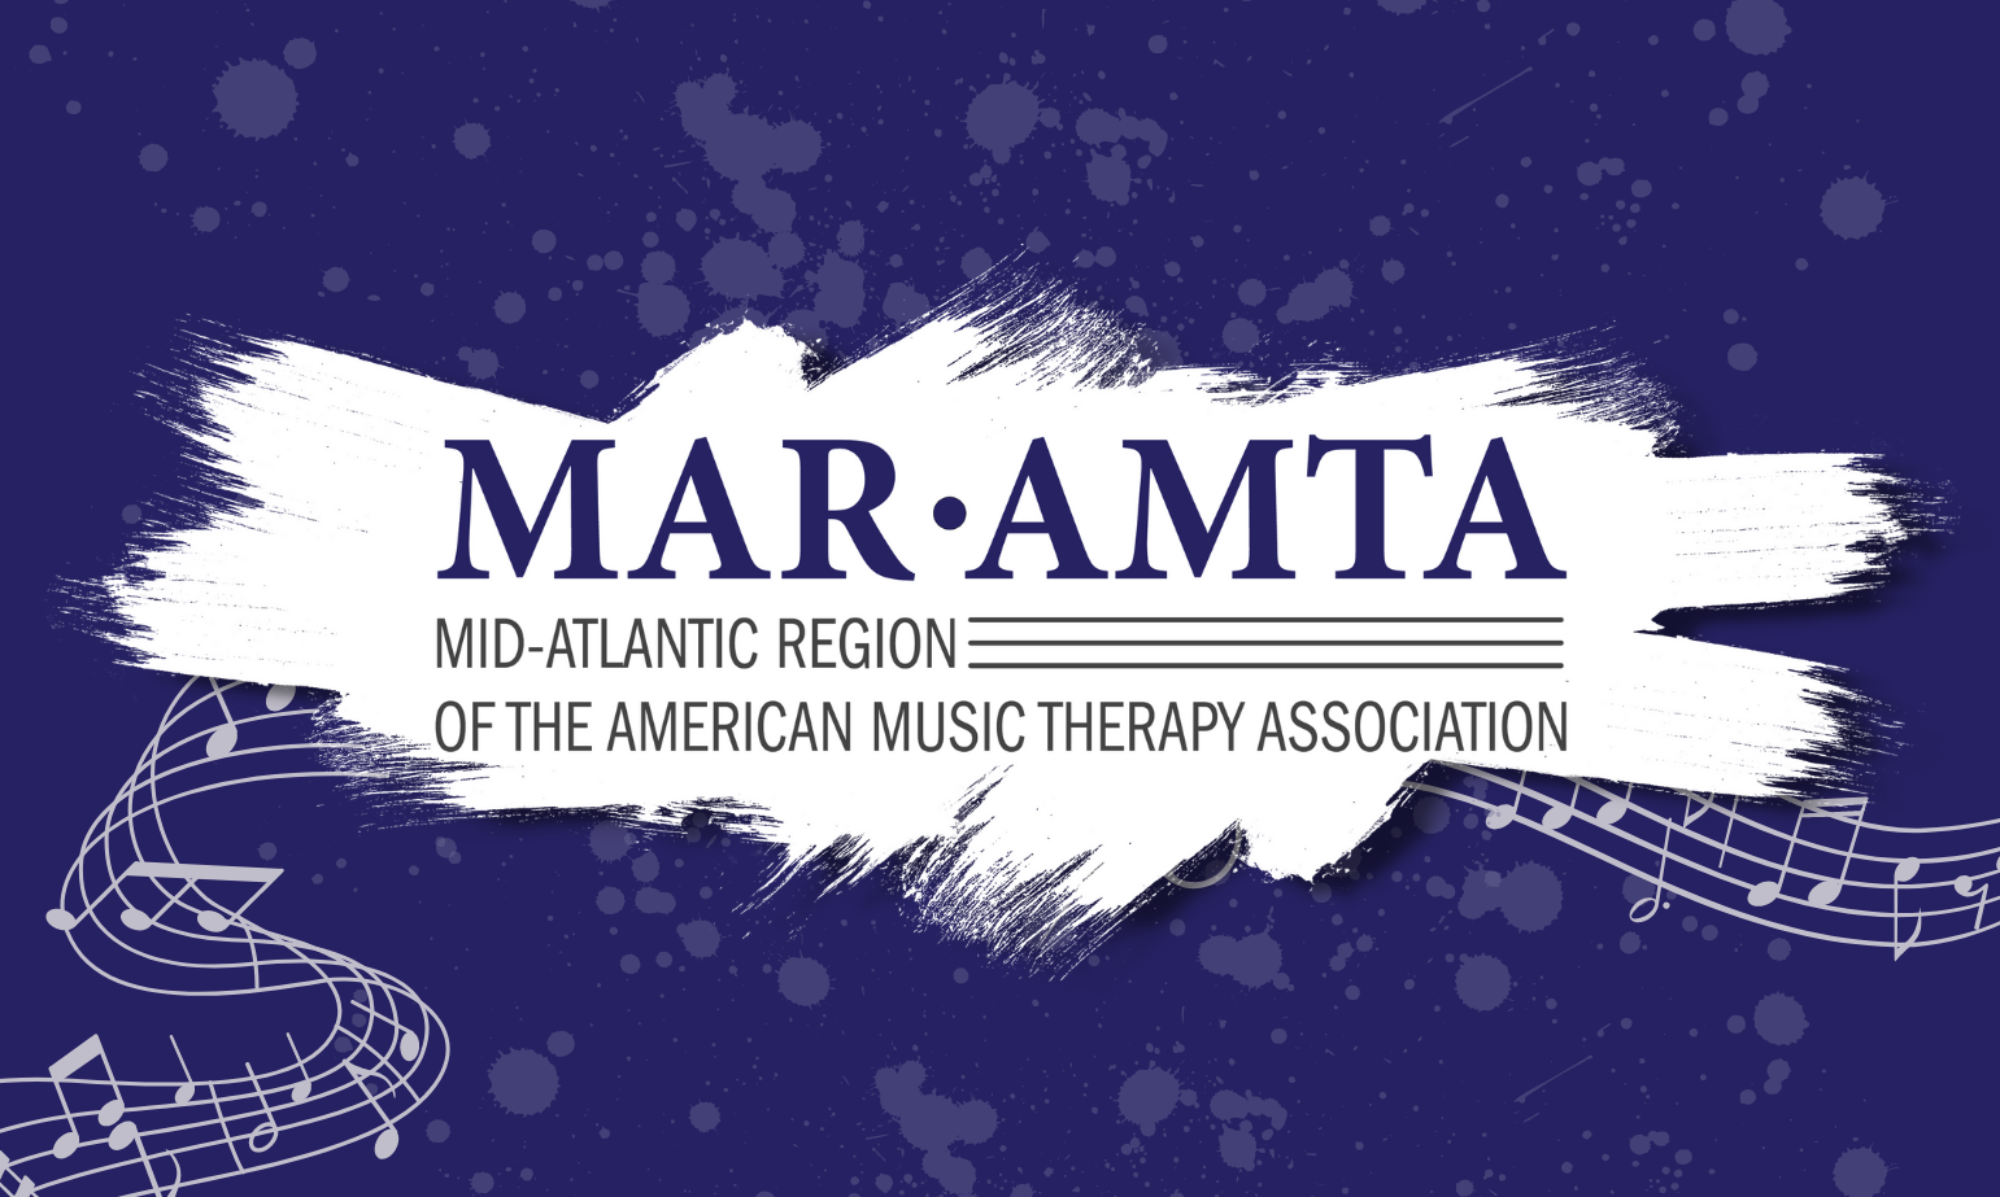 to MARAMTA! MidAtlantic Region of the American Music